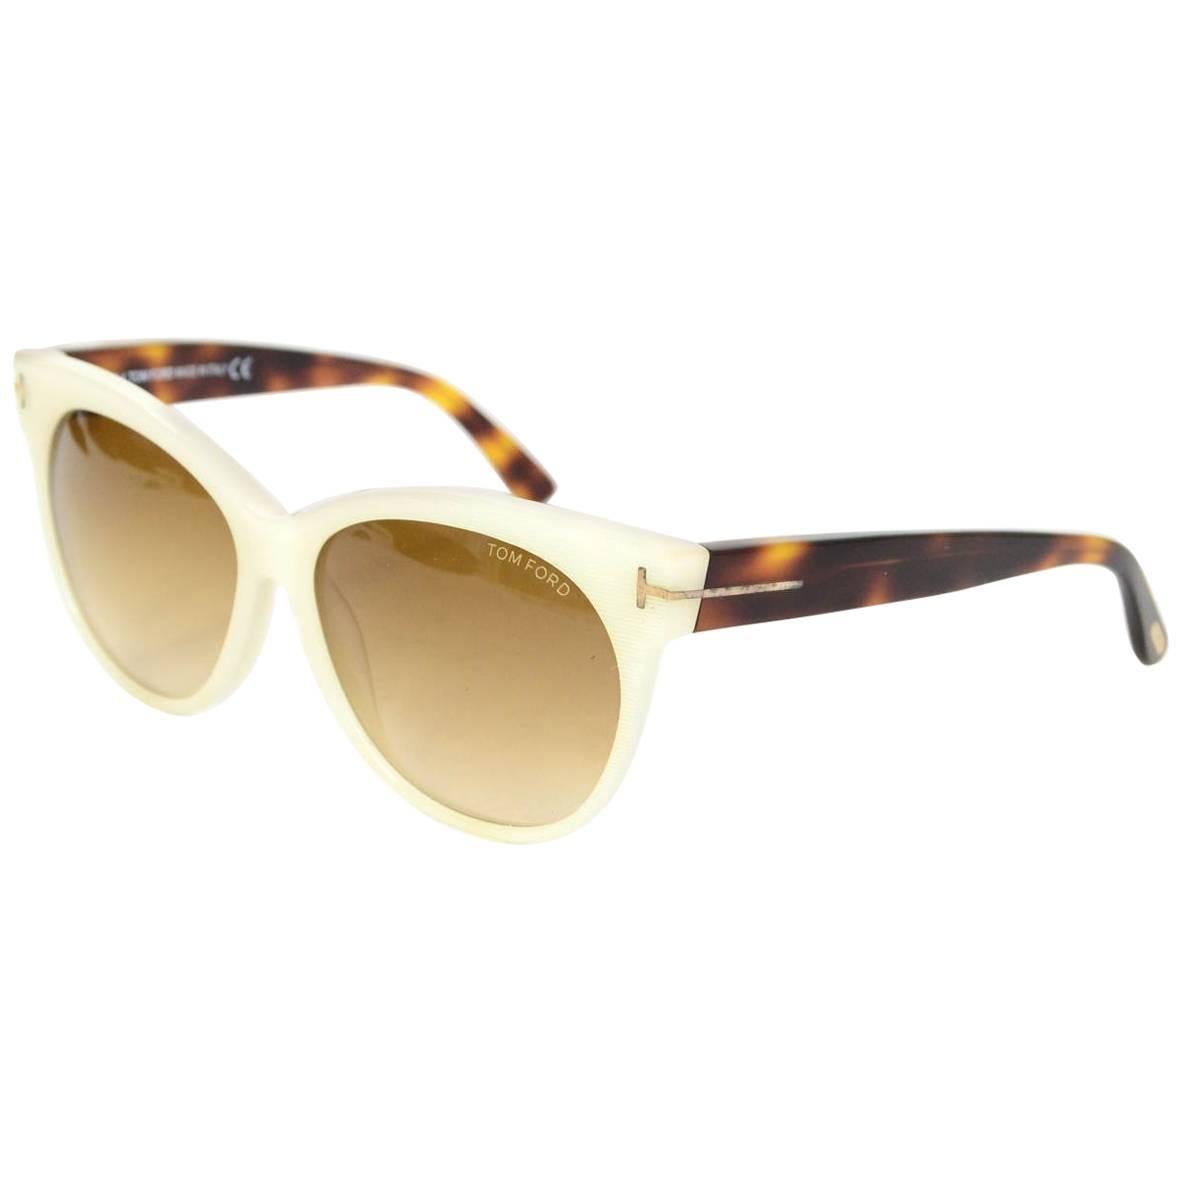 Tom Ford Ivory & Tortoise Saskia Sunglasses with Case